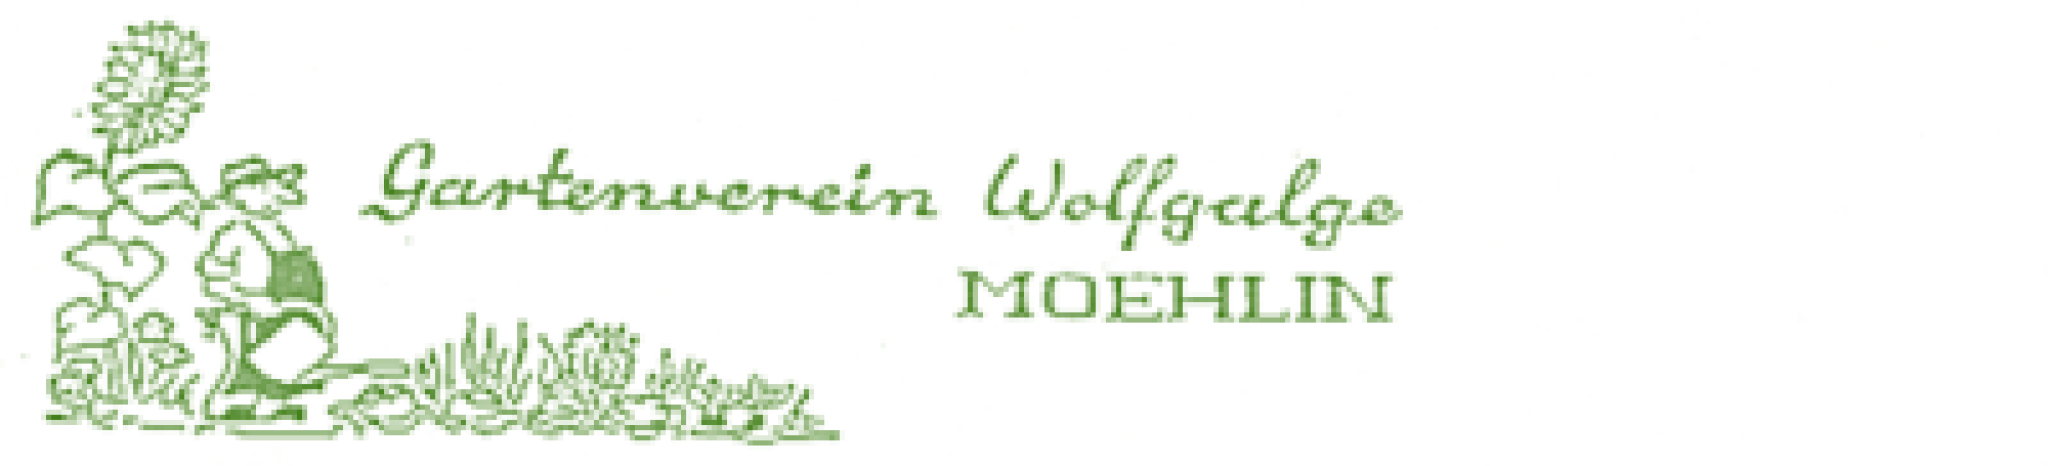 Gartenverein Wolfgalge Möhlin